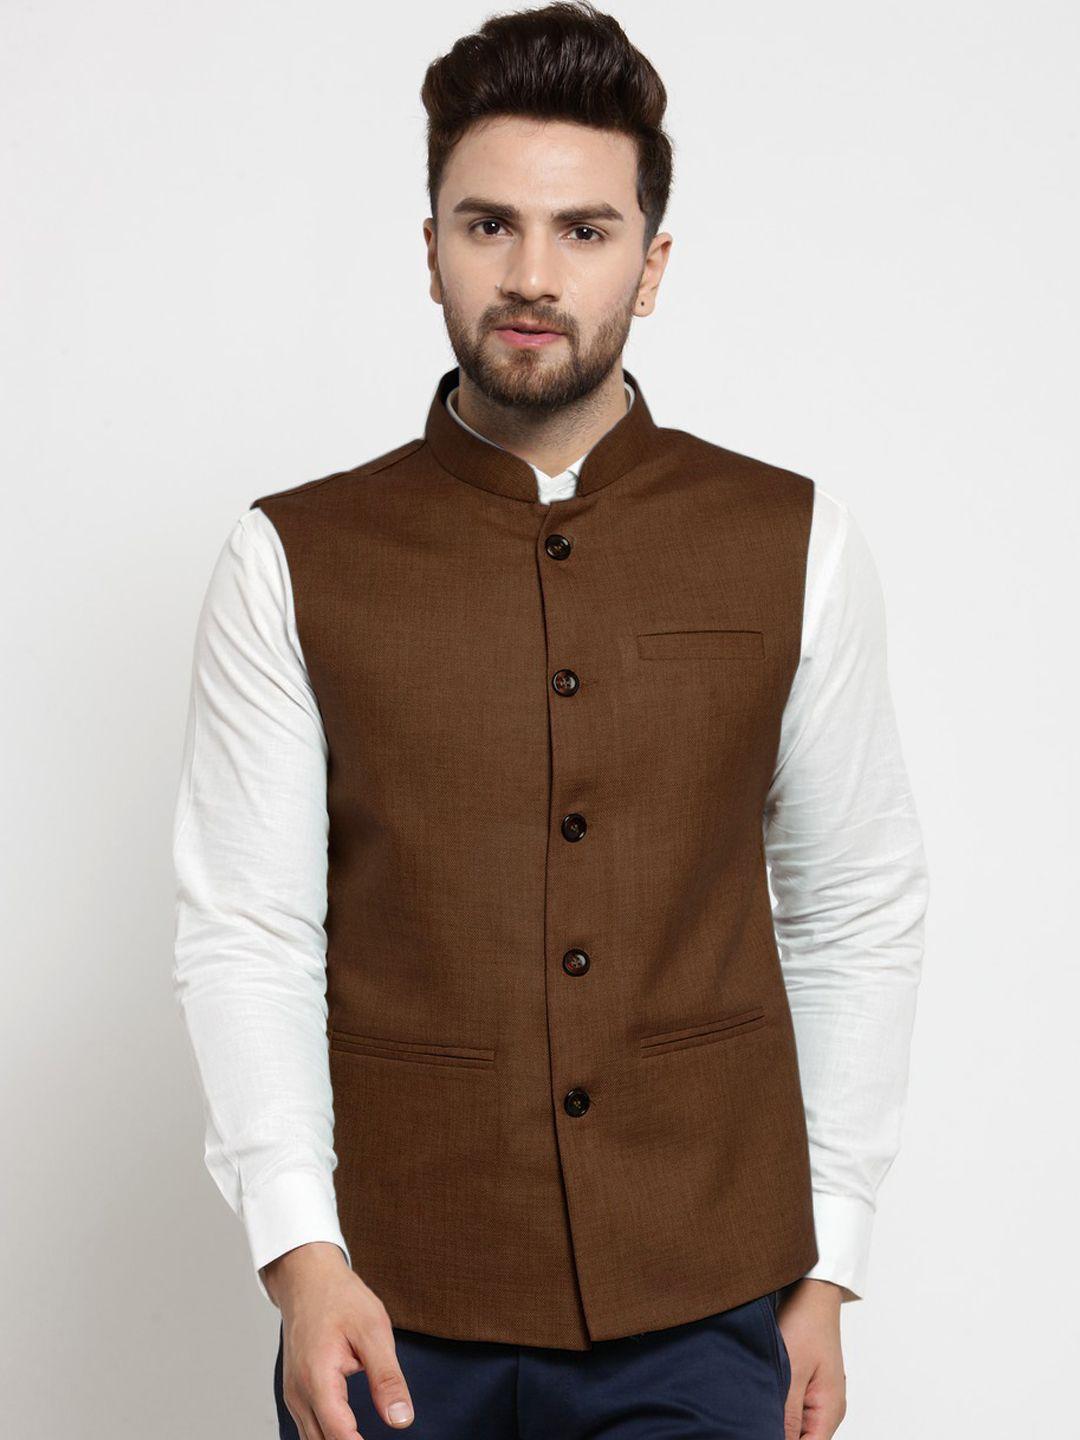 treemoda-men-brown-solid-nehru-jacket